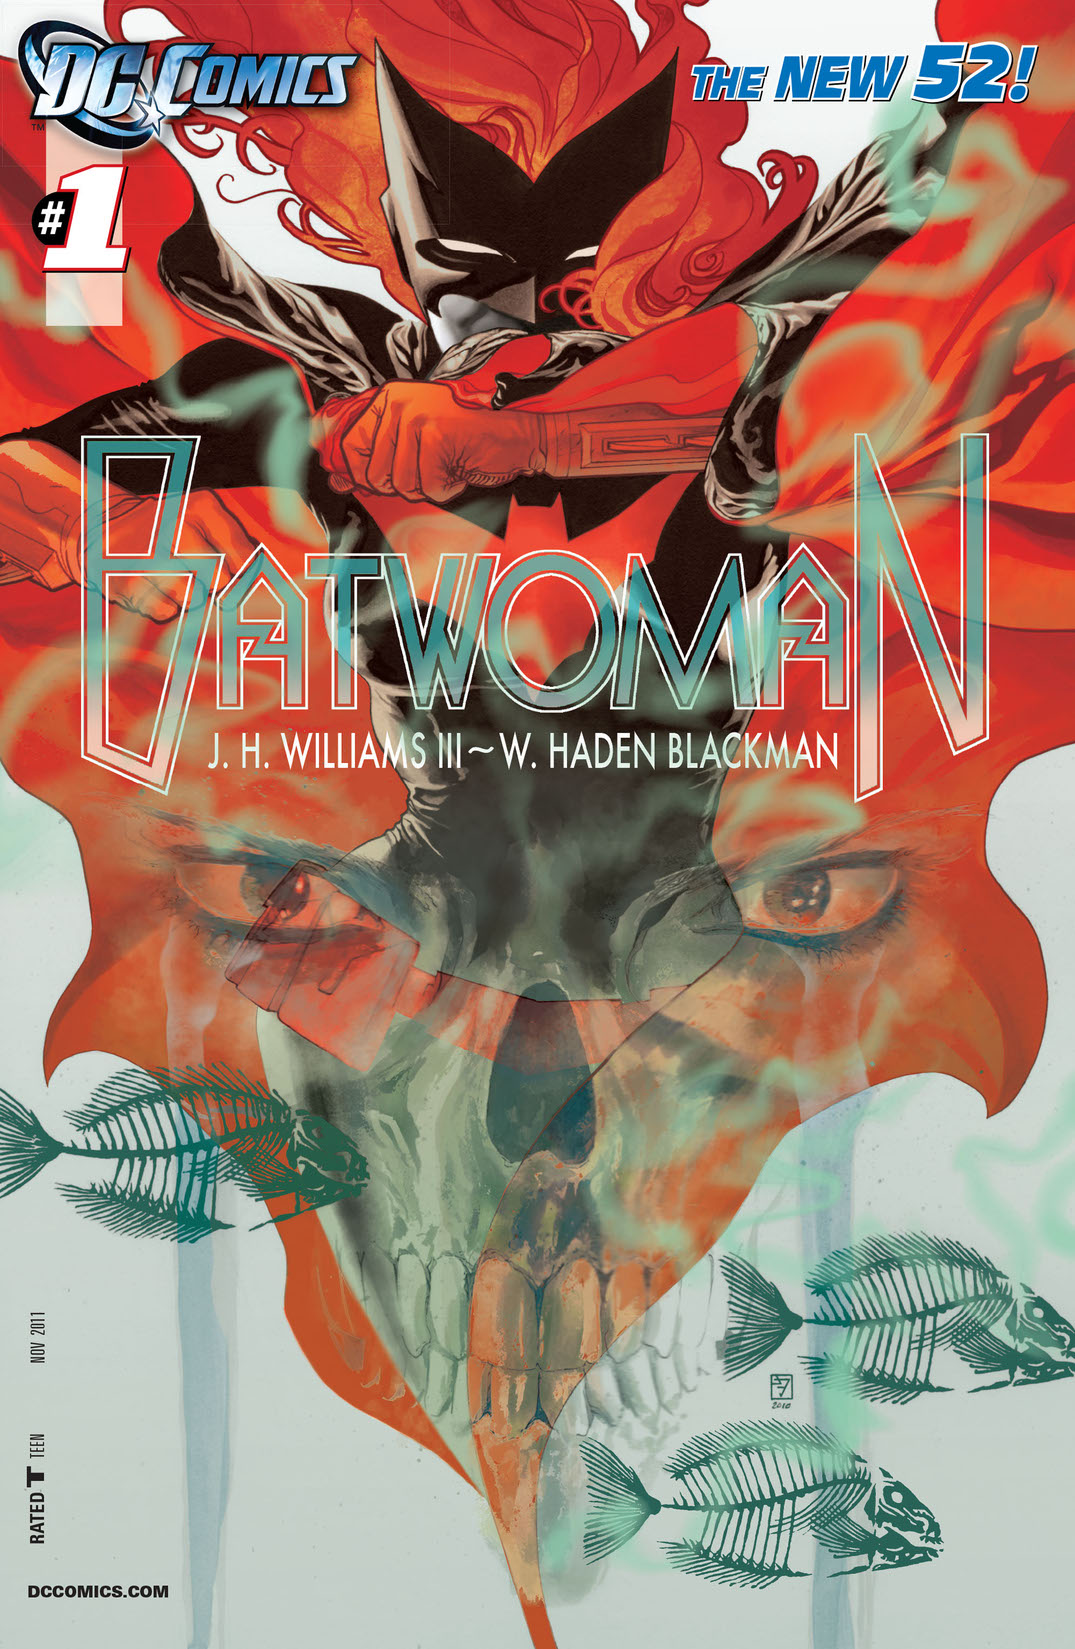 Batwoman (2011-) #1 preview images